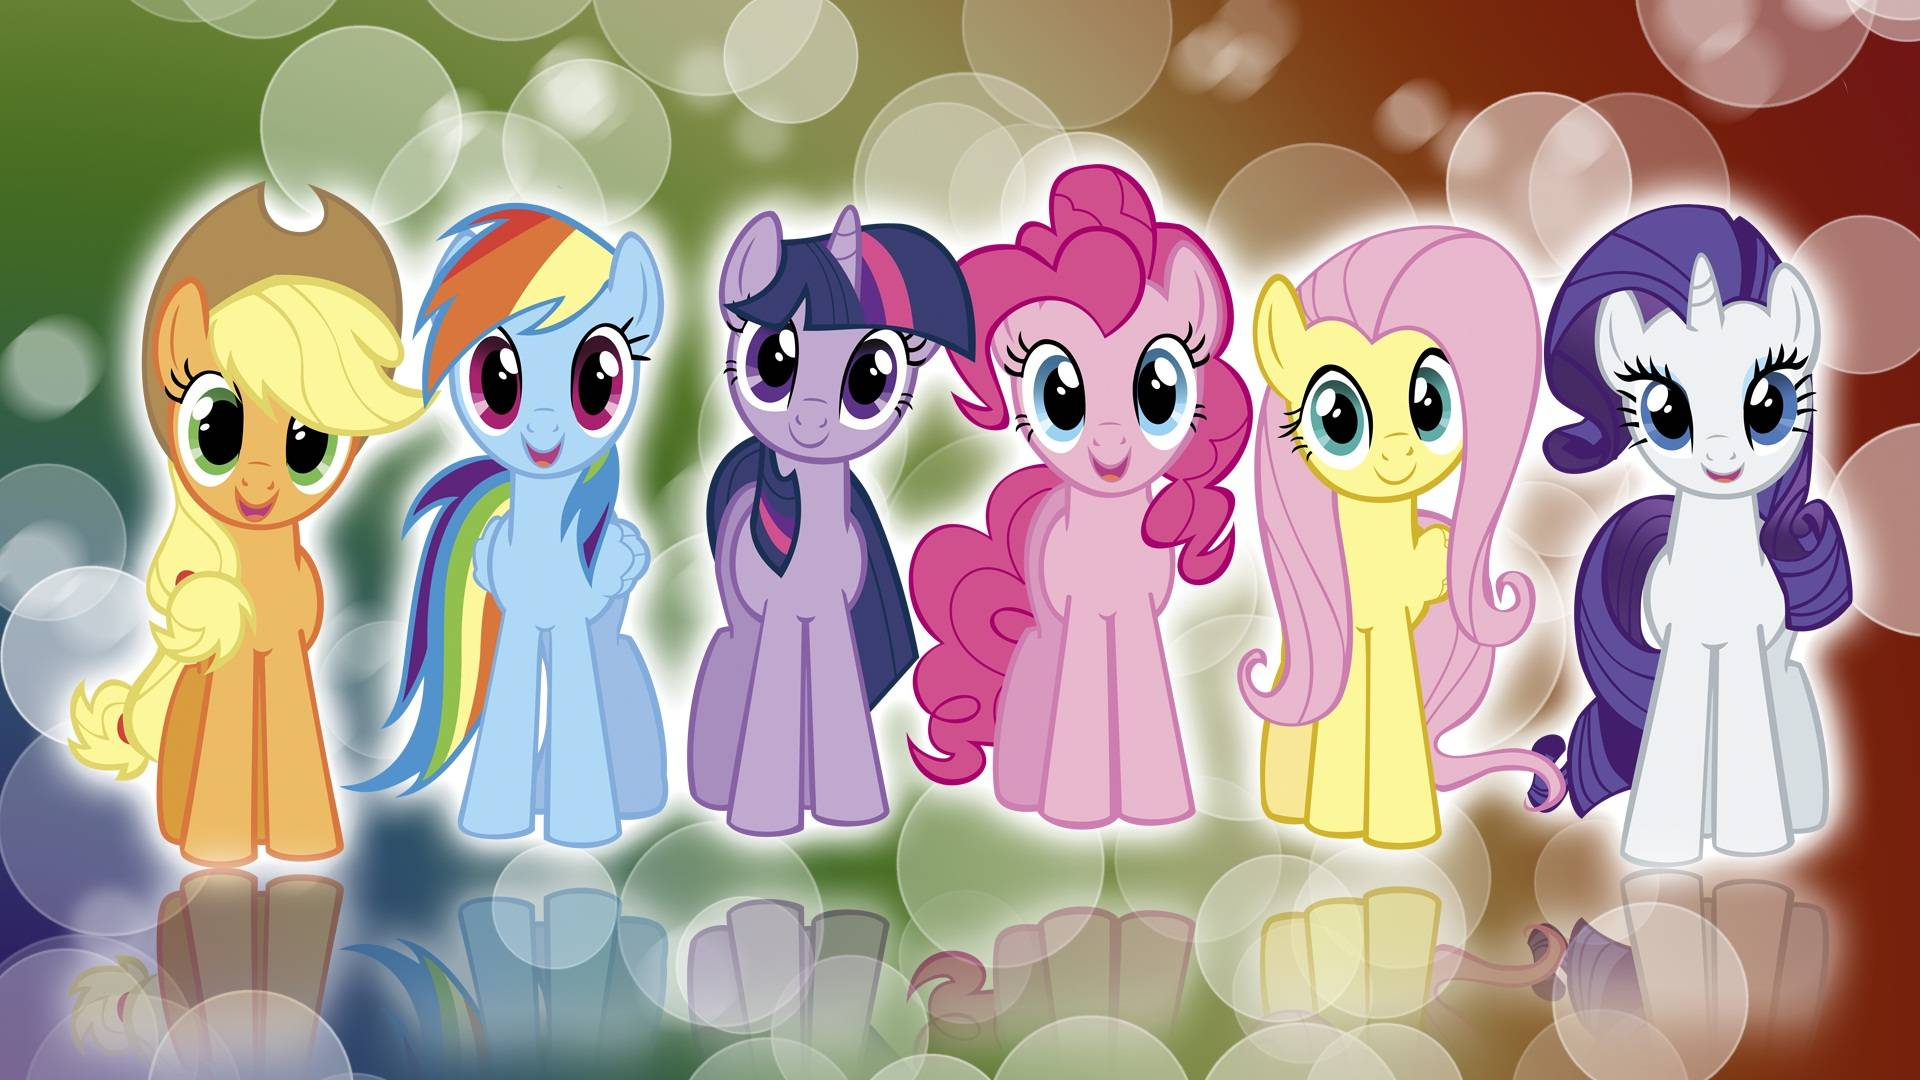 1920x1080 My Little Pony Friendship Is Magic Wallpapers Top Free My Little Pony Friendship Is Magic Backgrounds